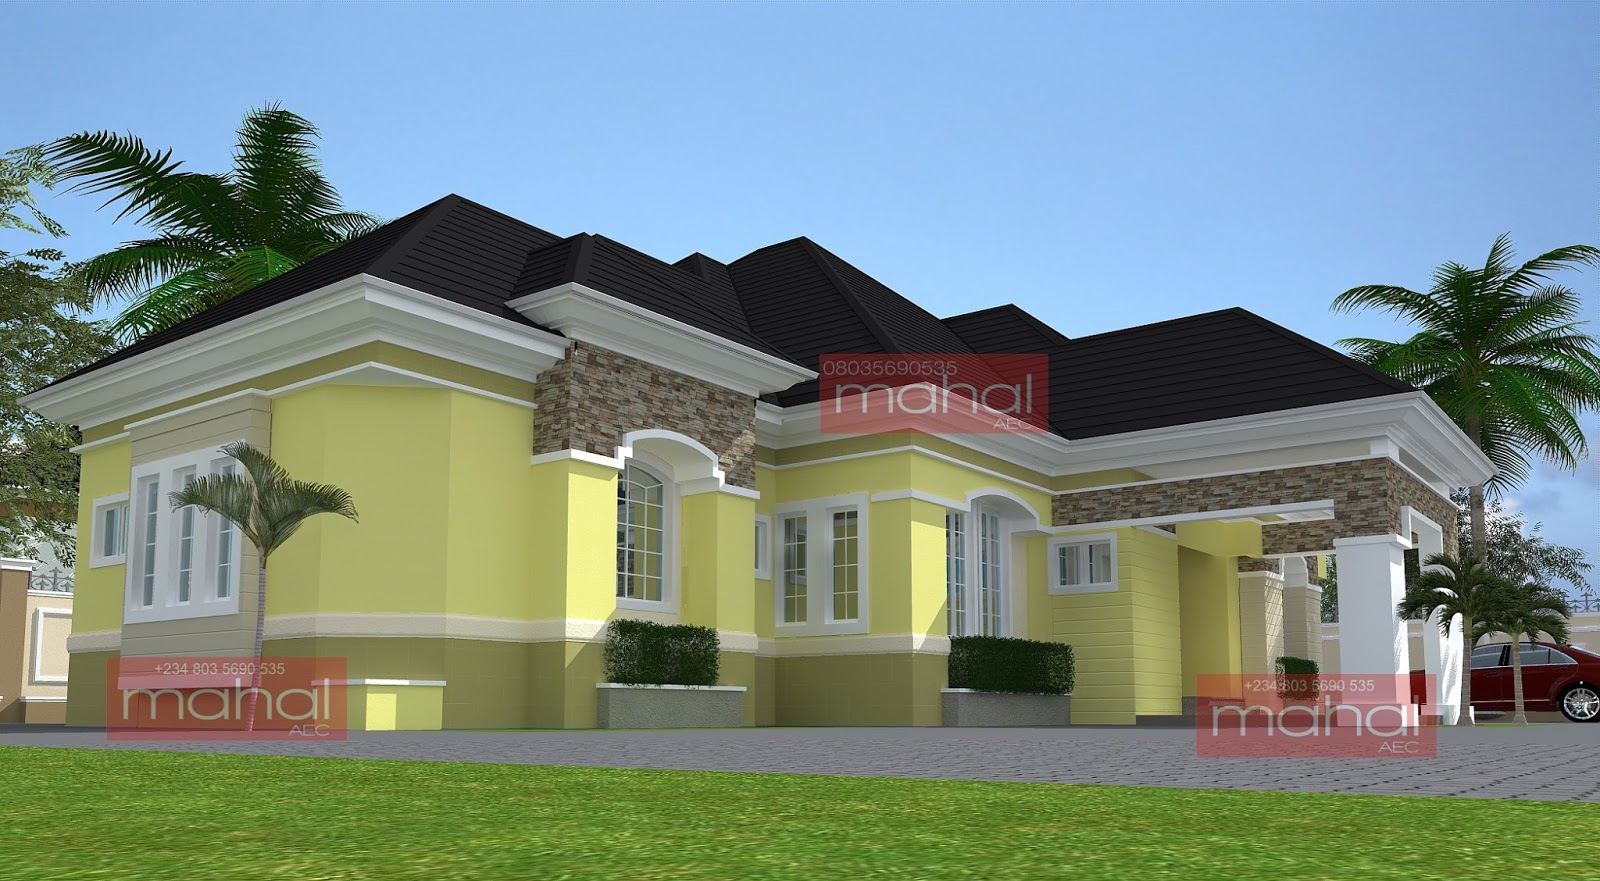 6 Bedroom Bungalow House  Plans  In Nigeria 